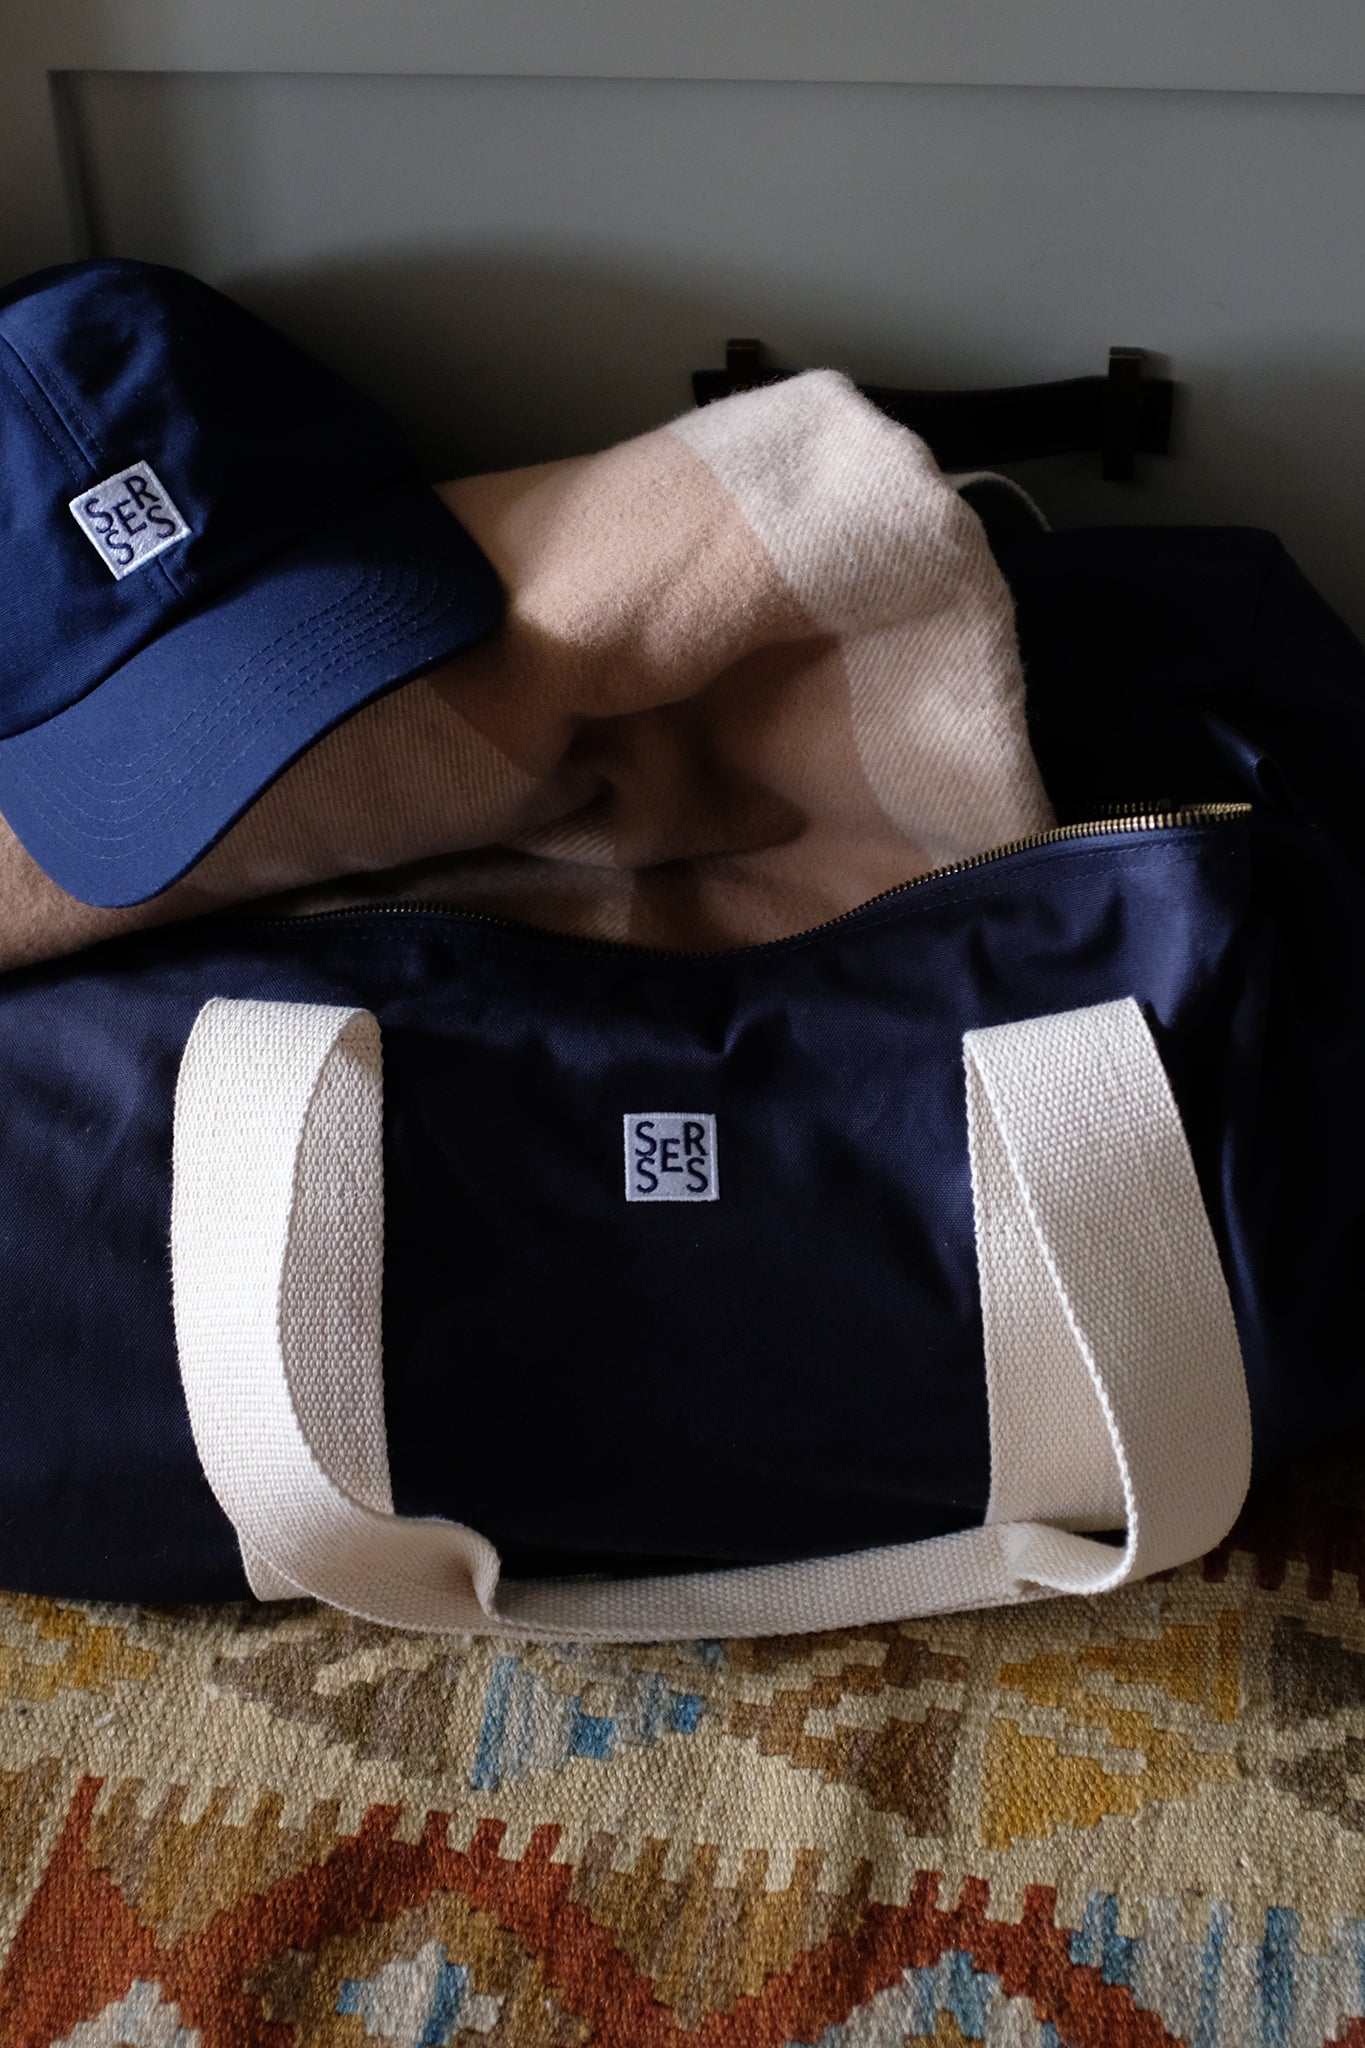 Monogram Organic Duffle Bag in Oxford Blue